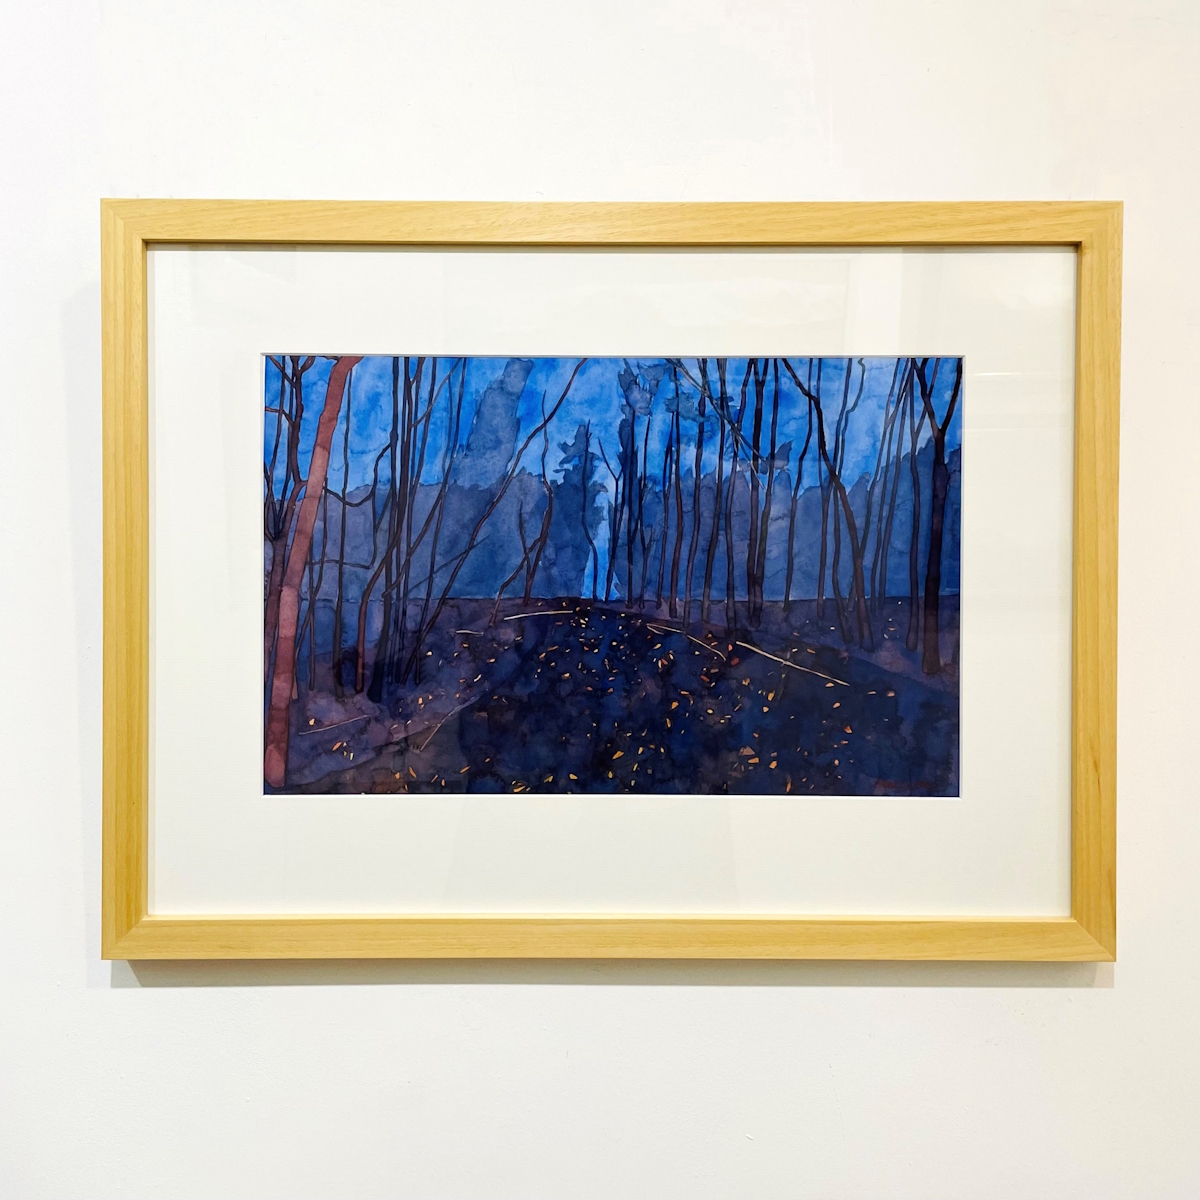 'Dusk in the Forest' by artist Katy Ellis